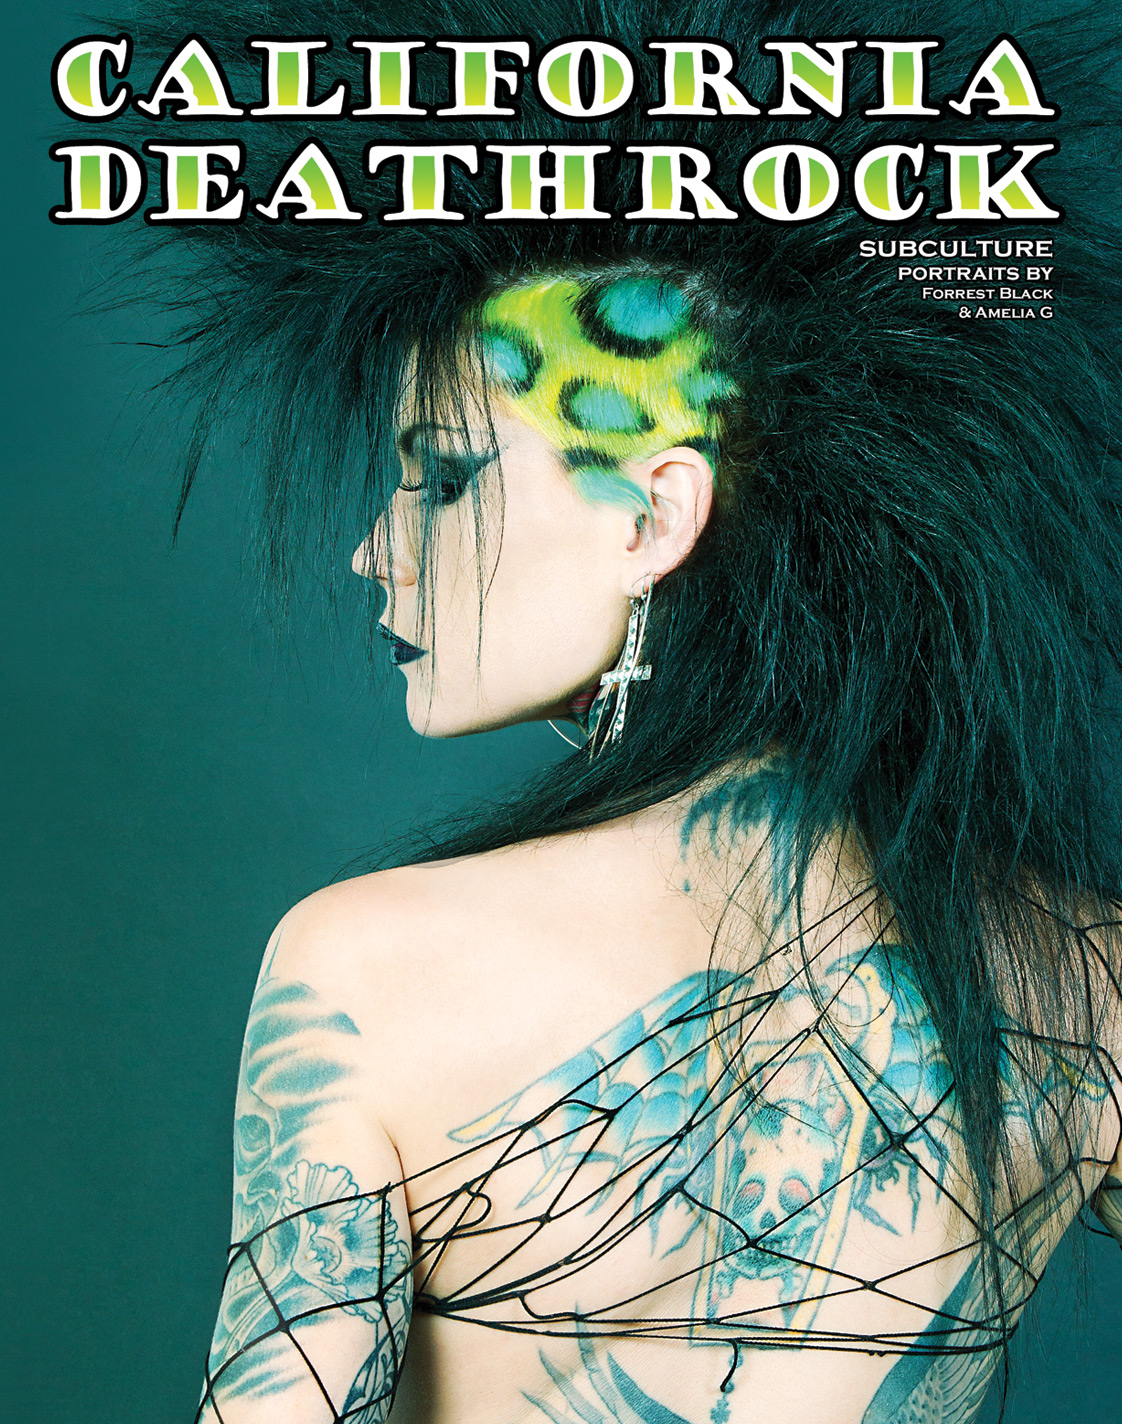 Malice McMunn on the Book Cover of California Deathrock